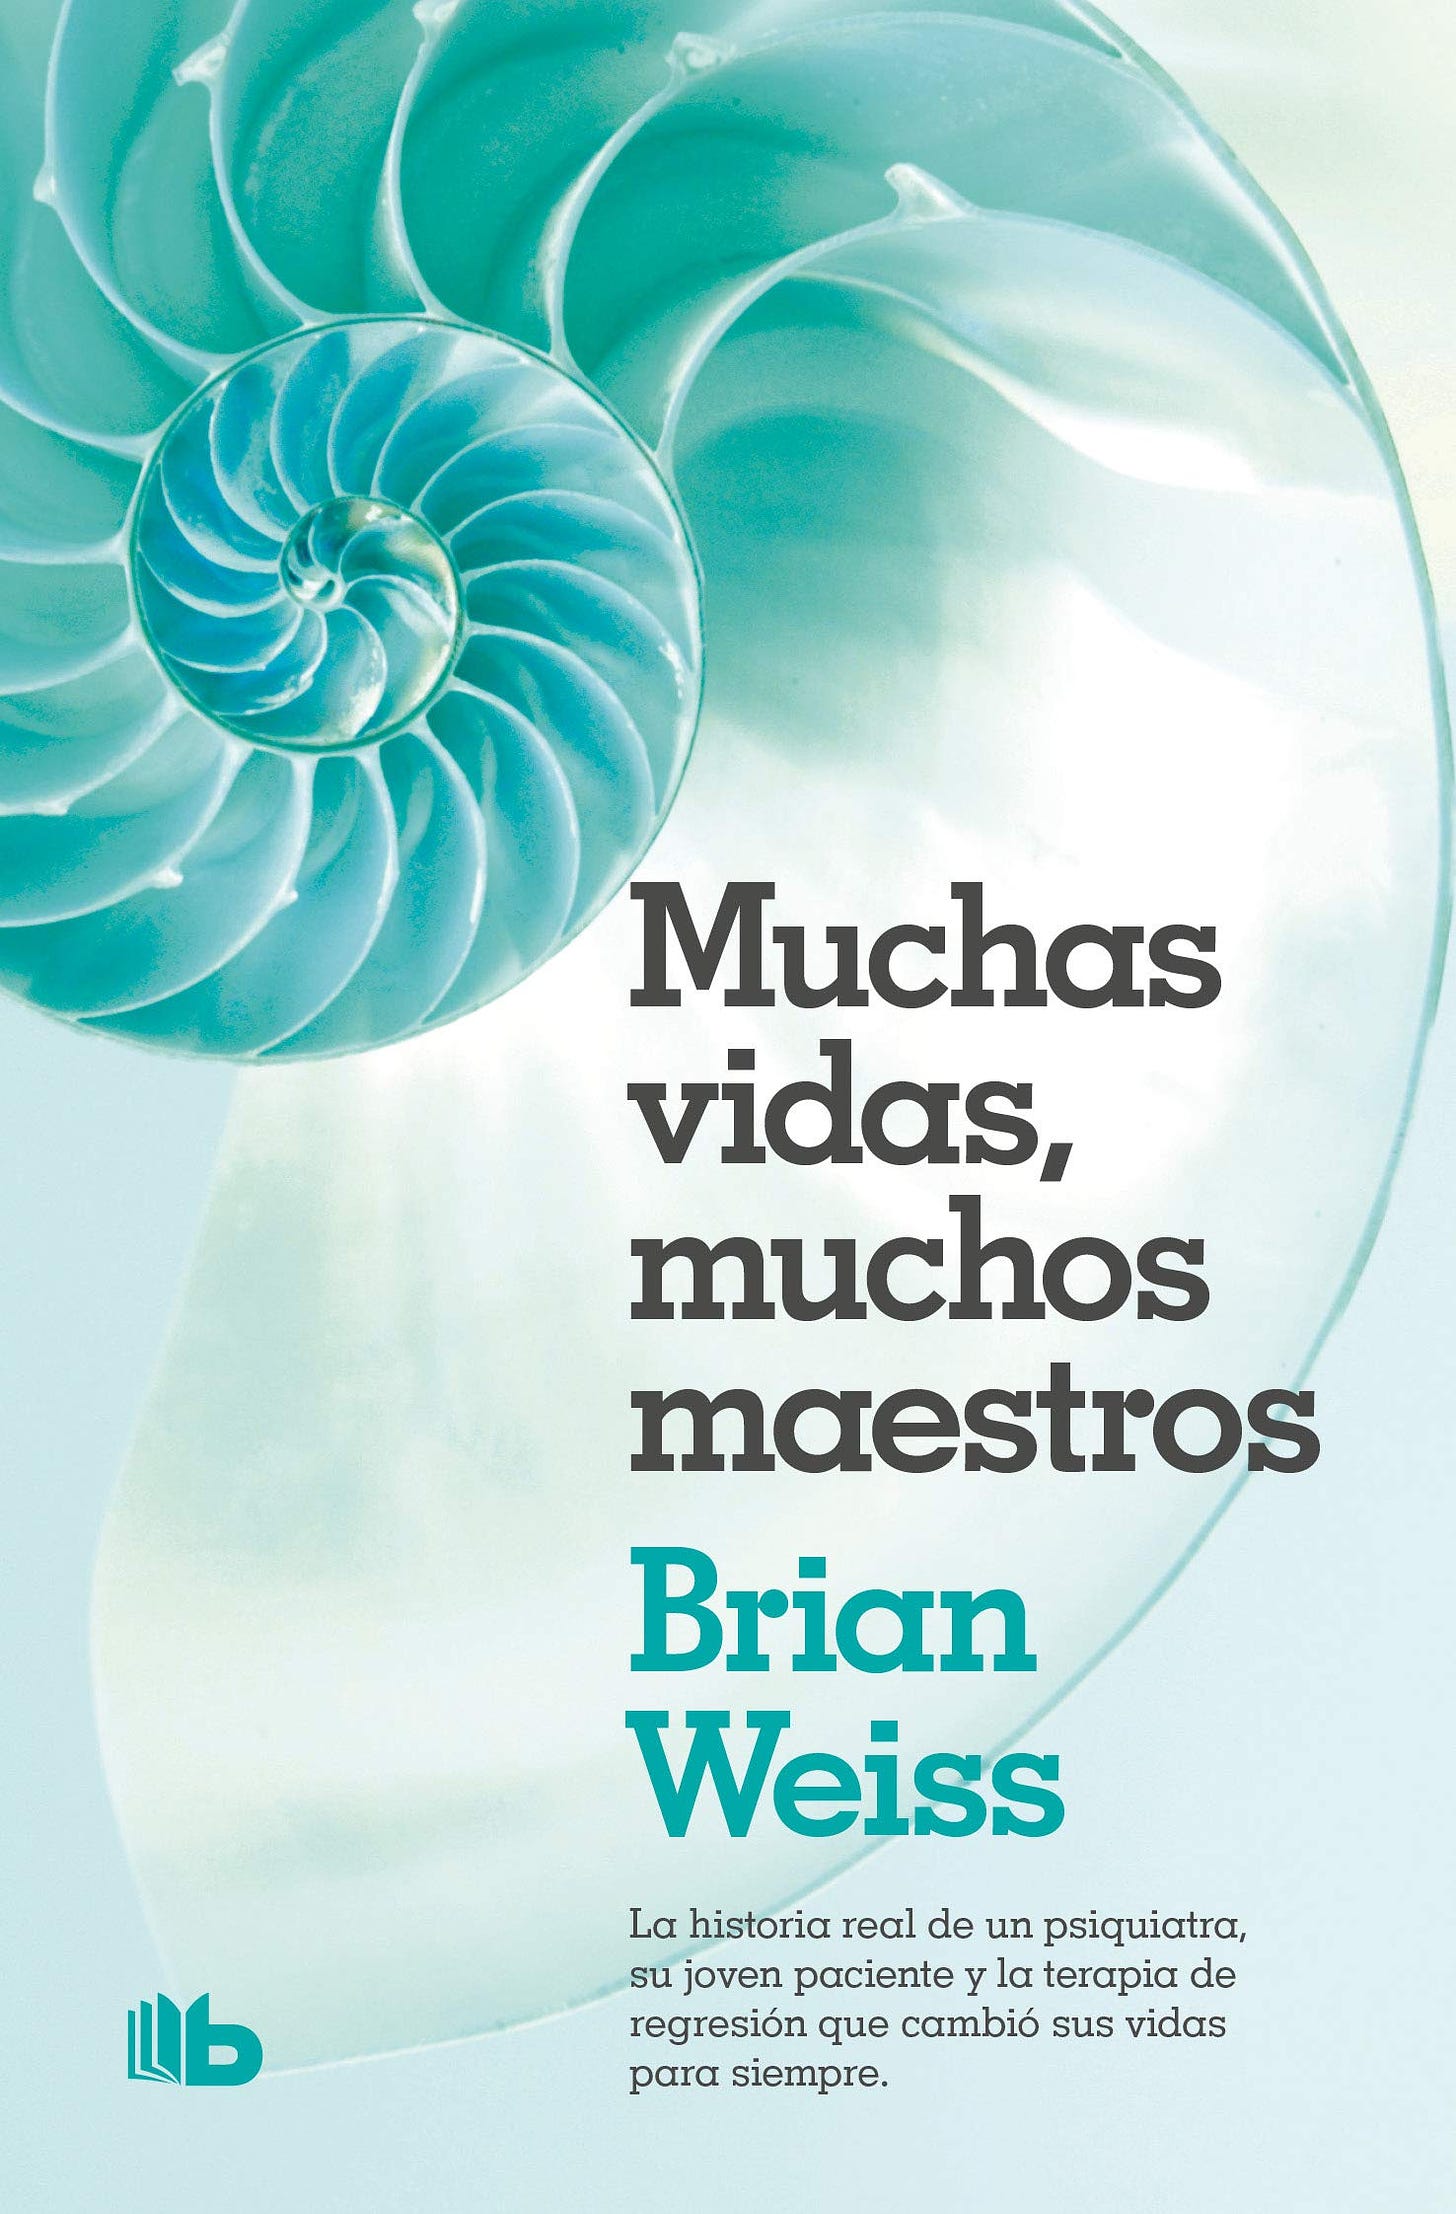 Muchas vidas, muchos maestros : Weiss, Brian: Amazon.com.mx: Libros